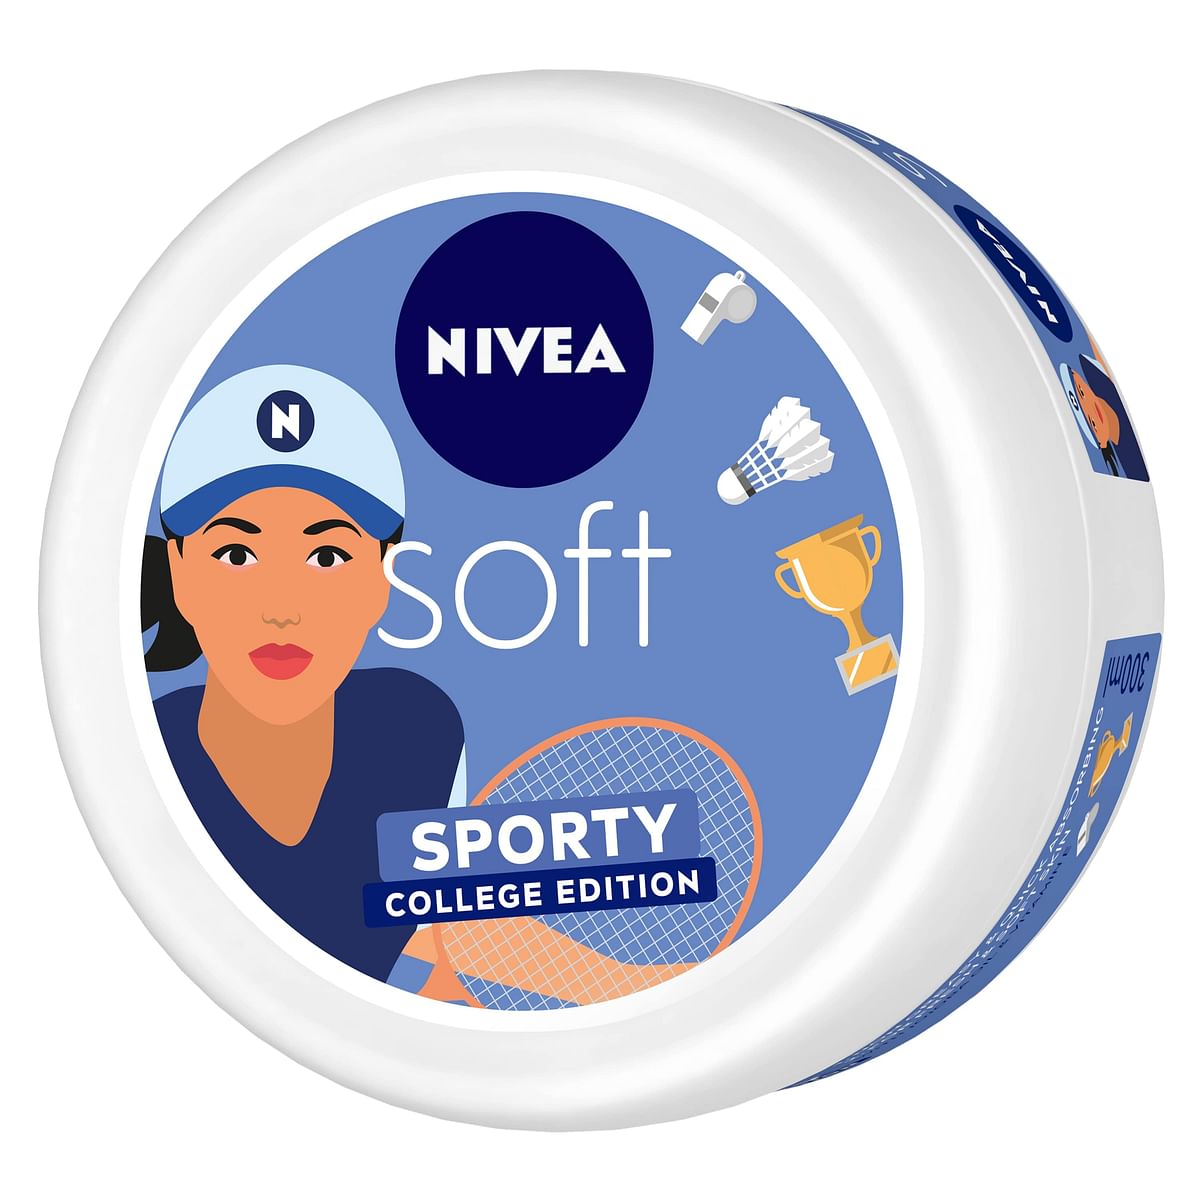 NIVEA tweaks packaging for its #NIVEASoftFreshBatch influencer initiative